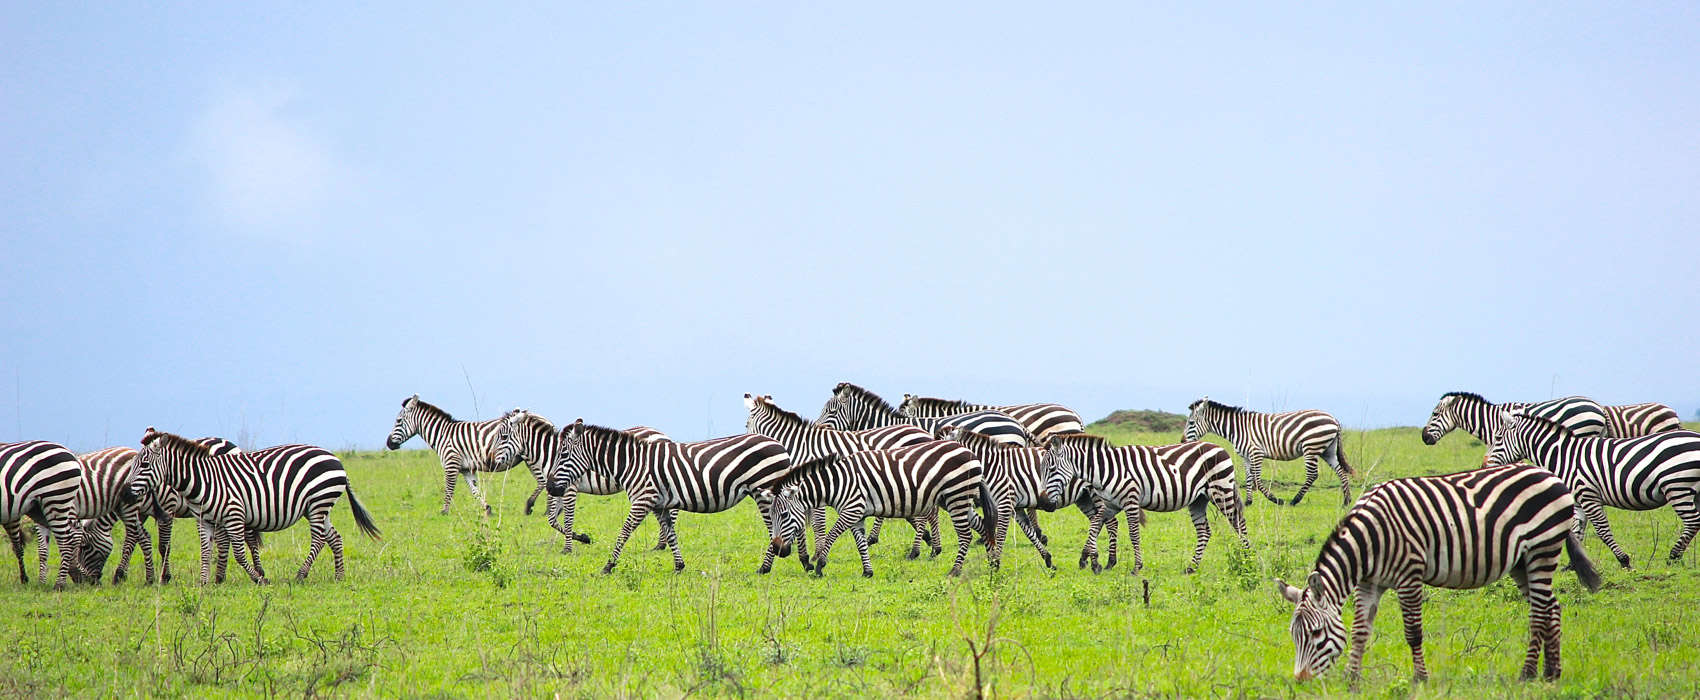 African Serengeti National Park Safari zebra